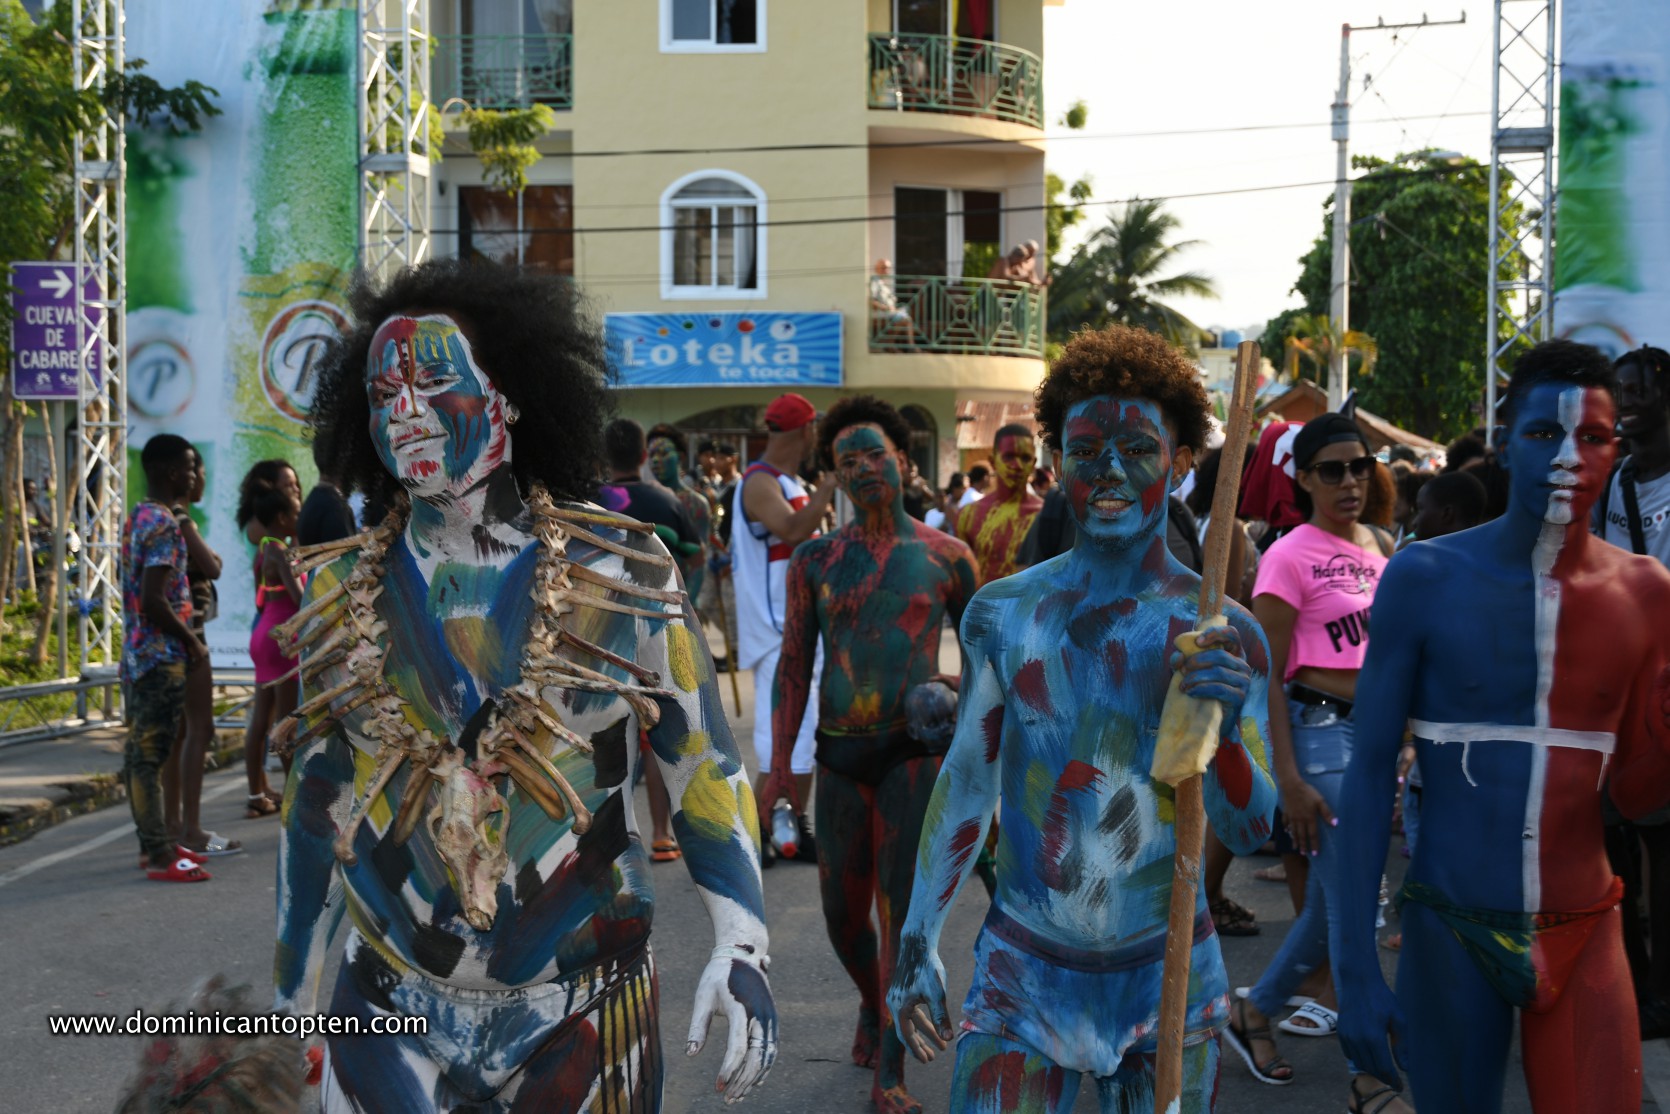 Tourists visiting the 2019 Cabarete carnival in Dominican Republic